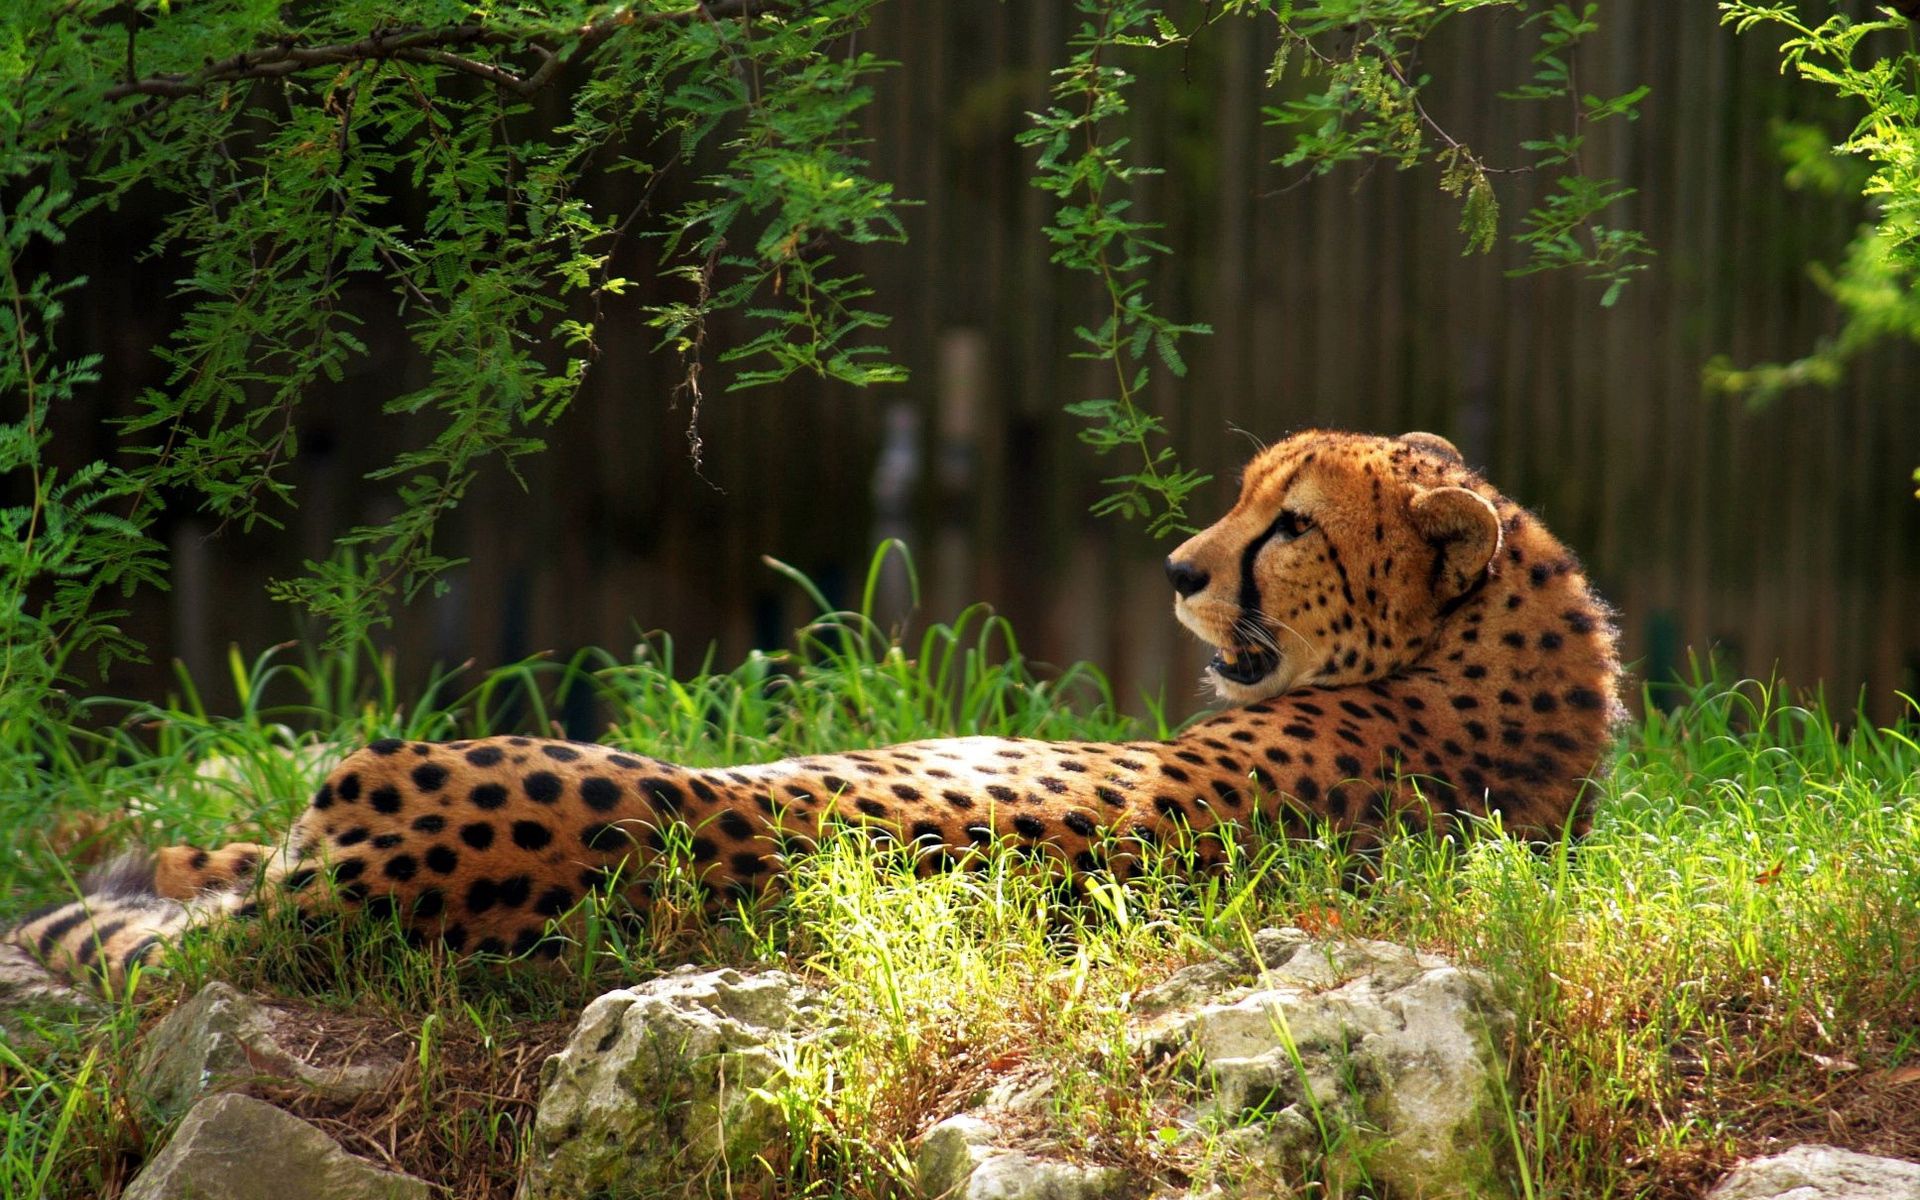 spotted, cheetah, animals, grass, spotty, big cat